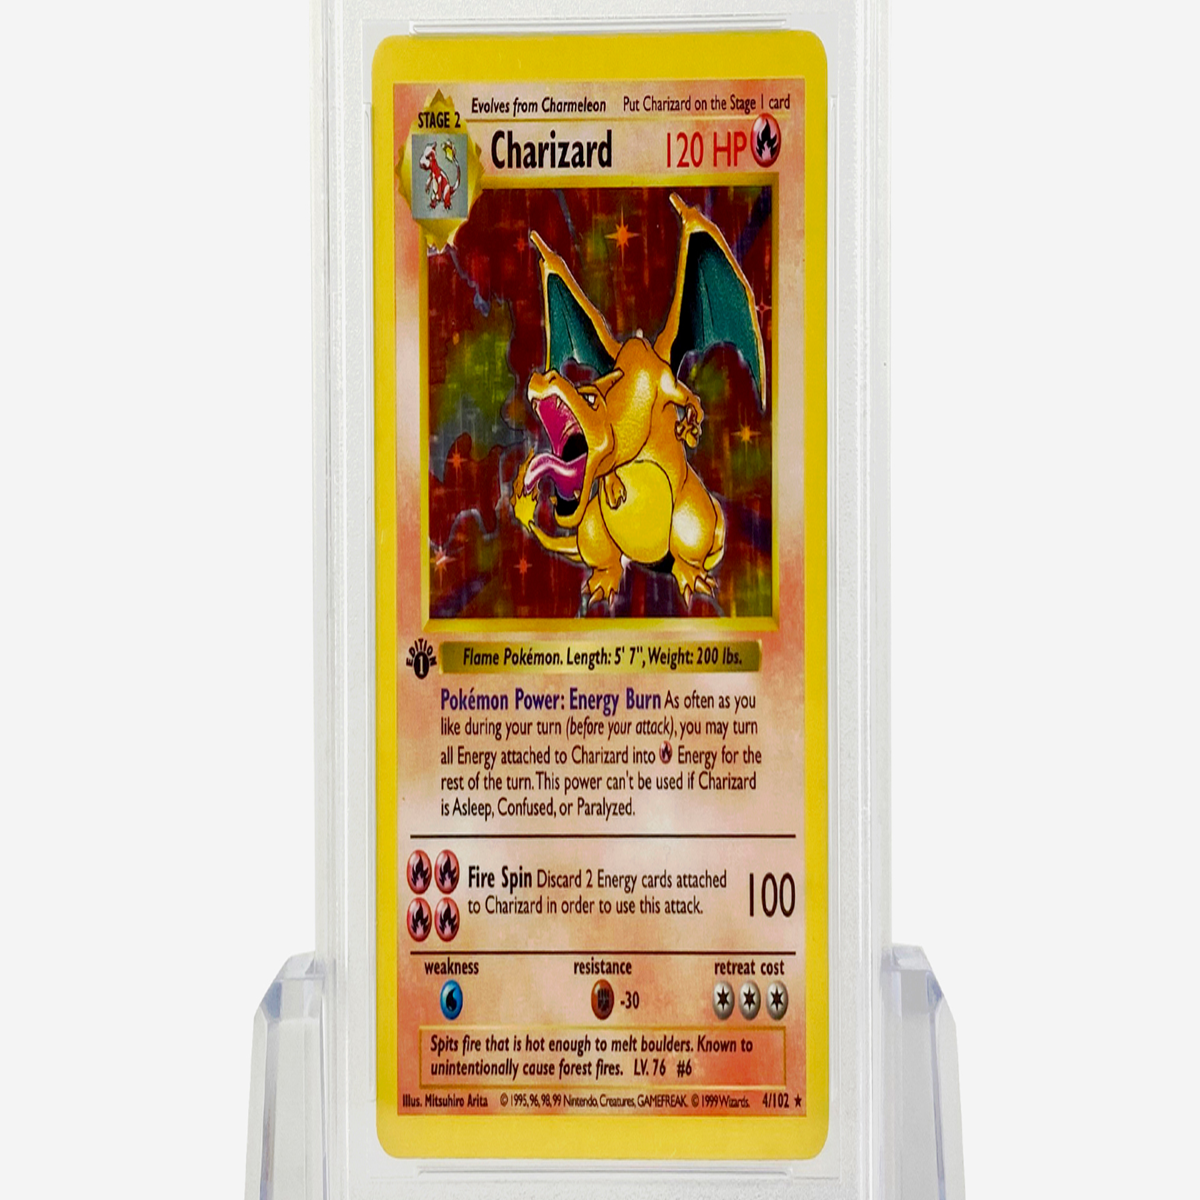 1999 shiny Charizard Pokémon card sells for record £169,000